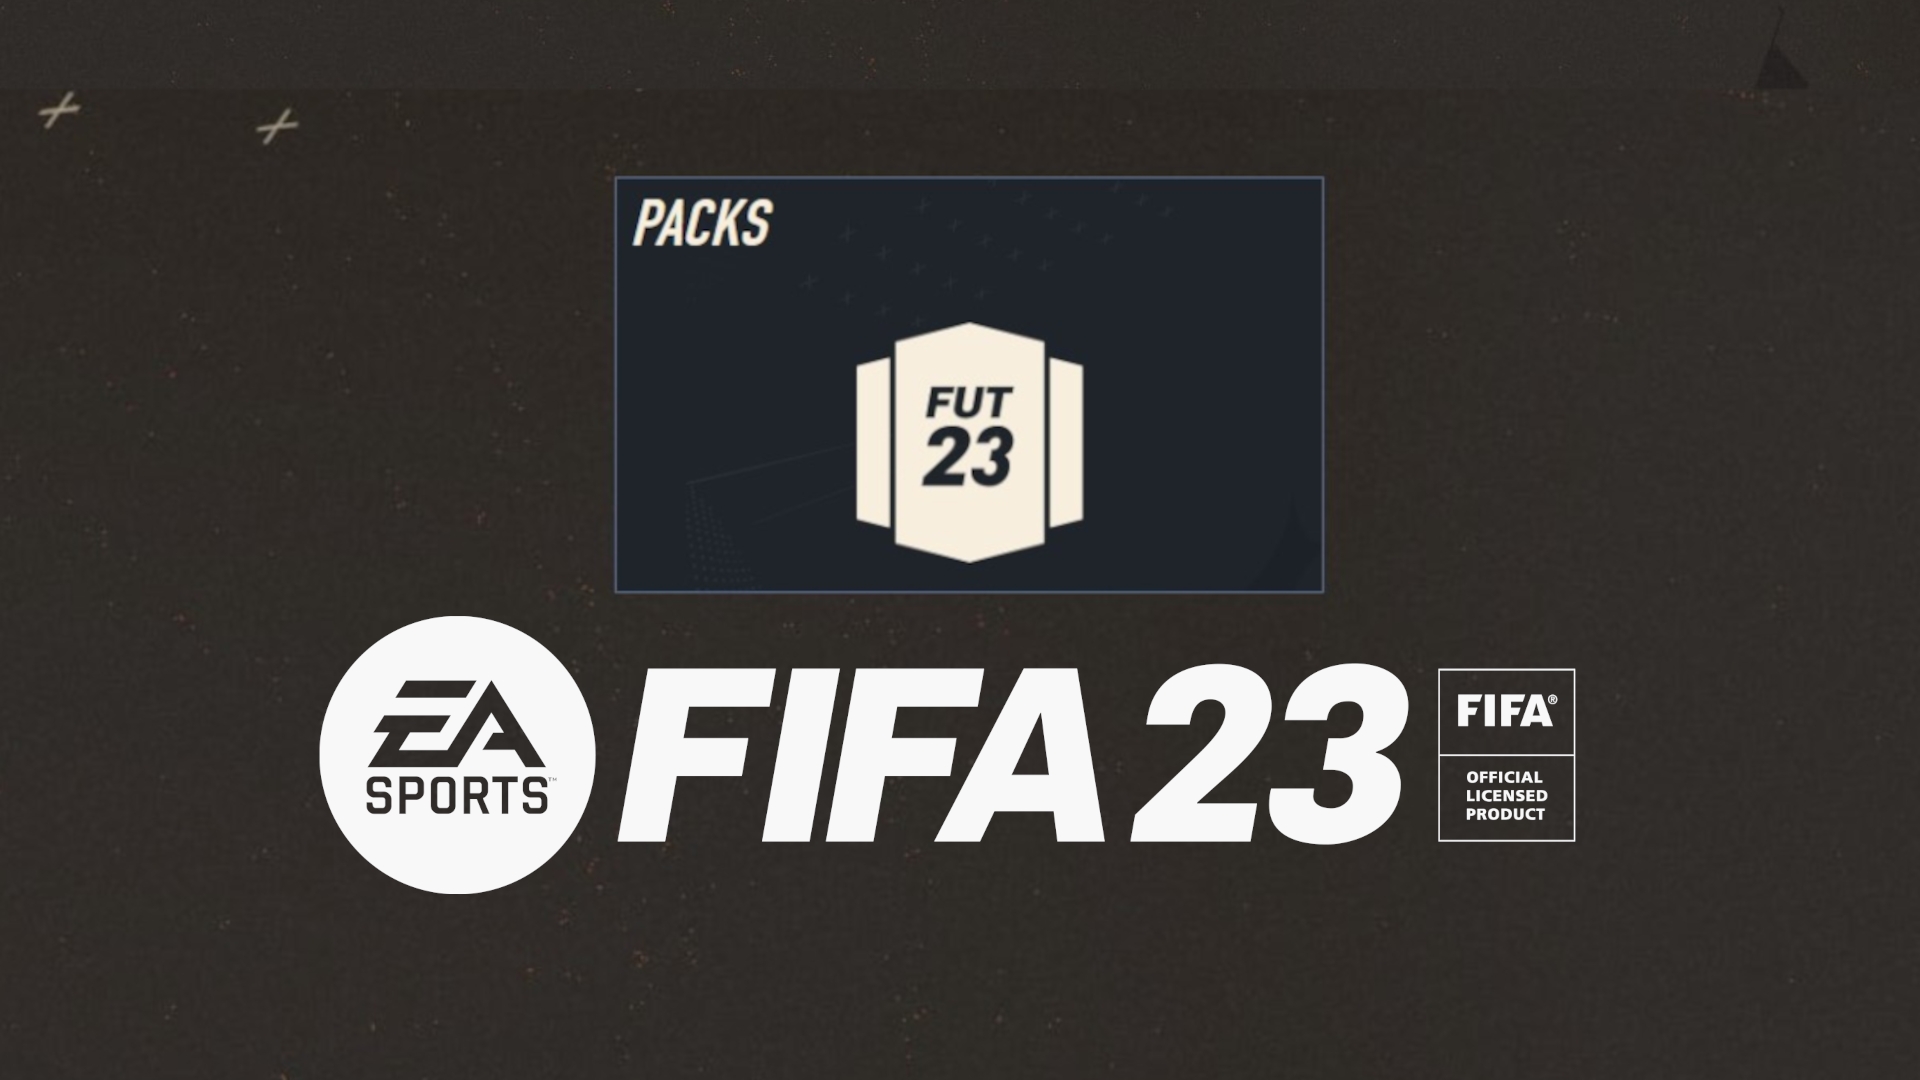 How to buy FIFA points on companion app FIFA 23 